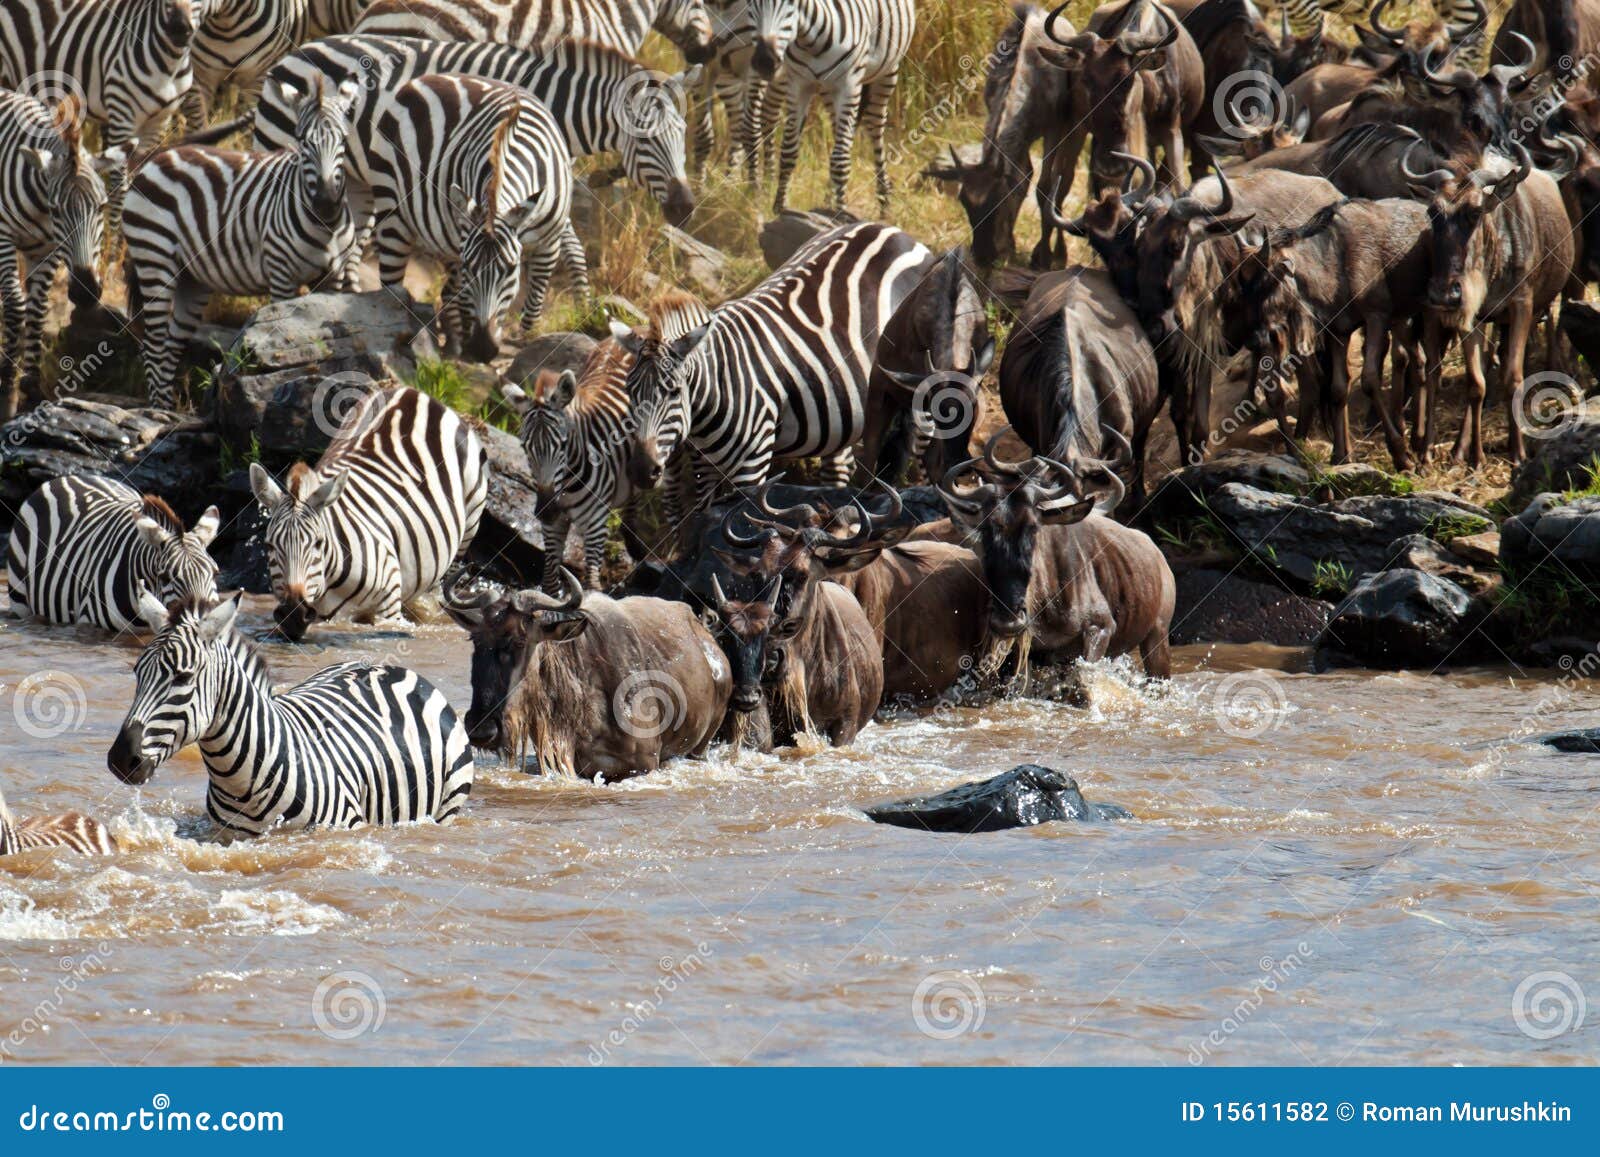 wildebeest and zebras crossing the river mara